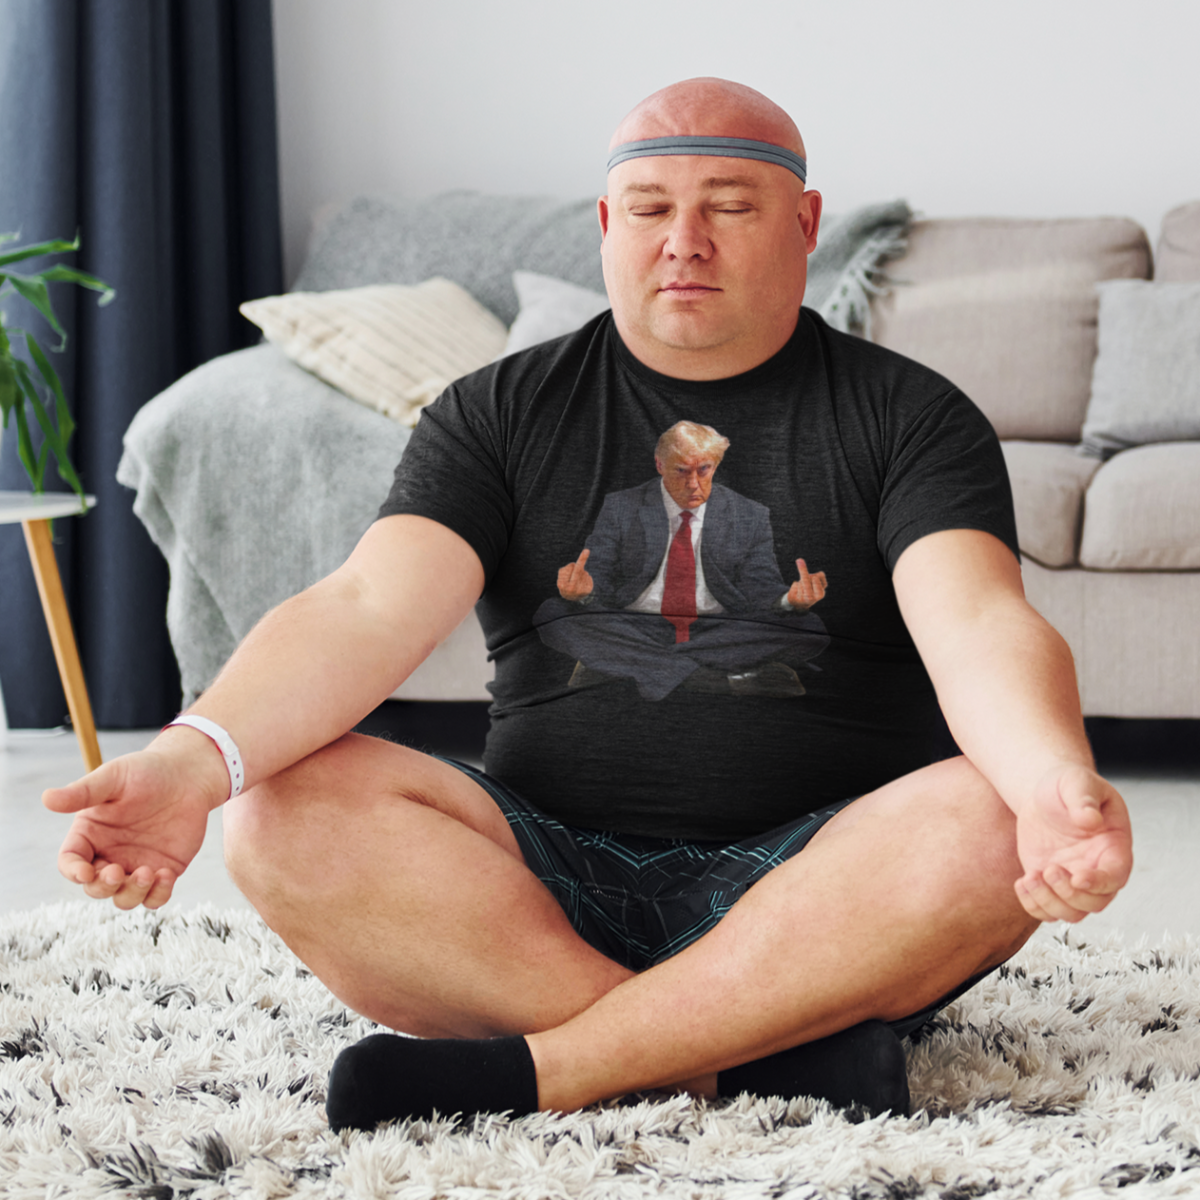 Zen of Trump Meditation T-Shirt